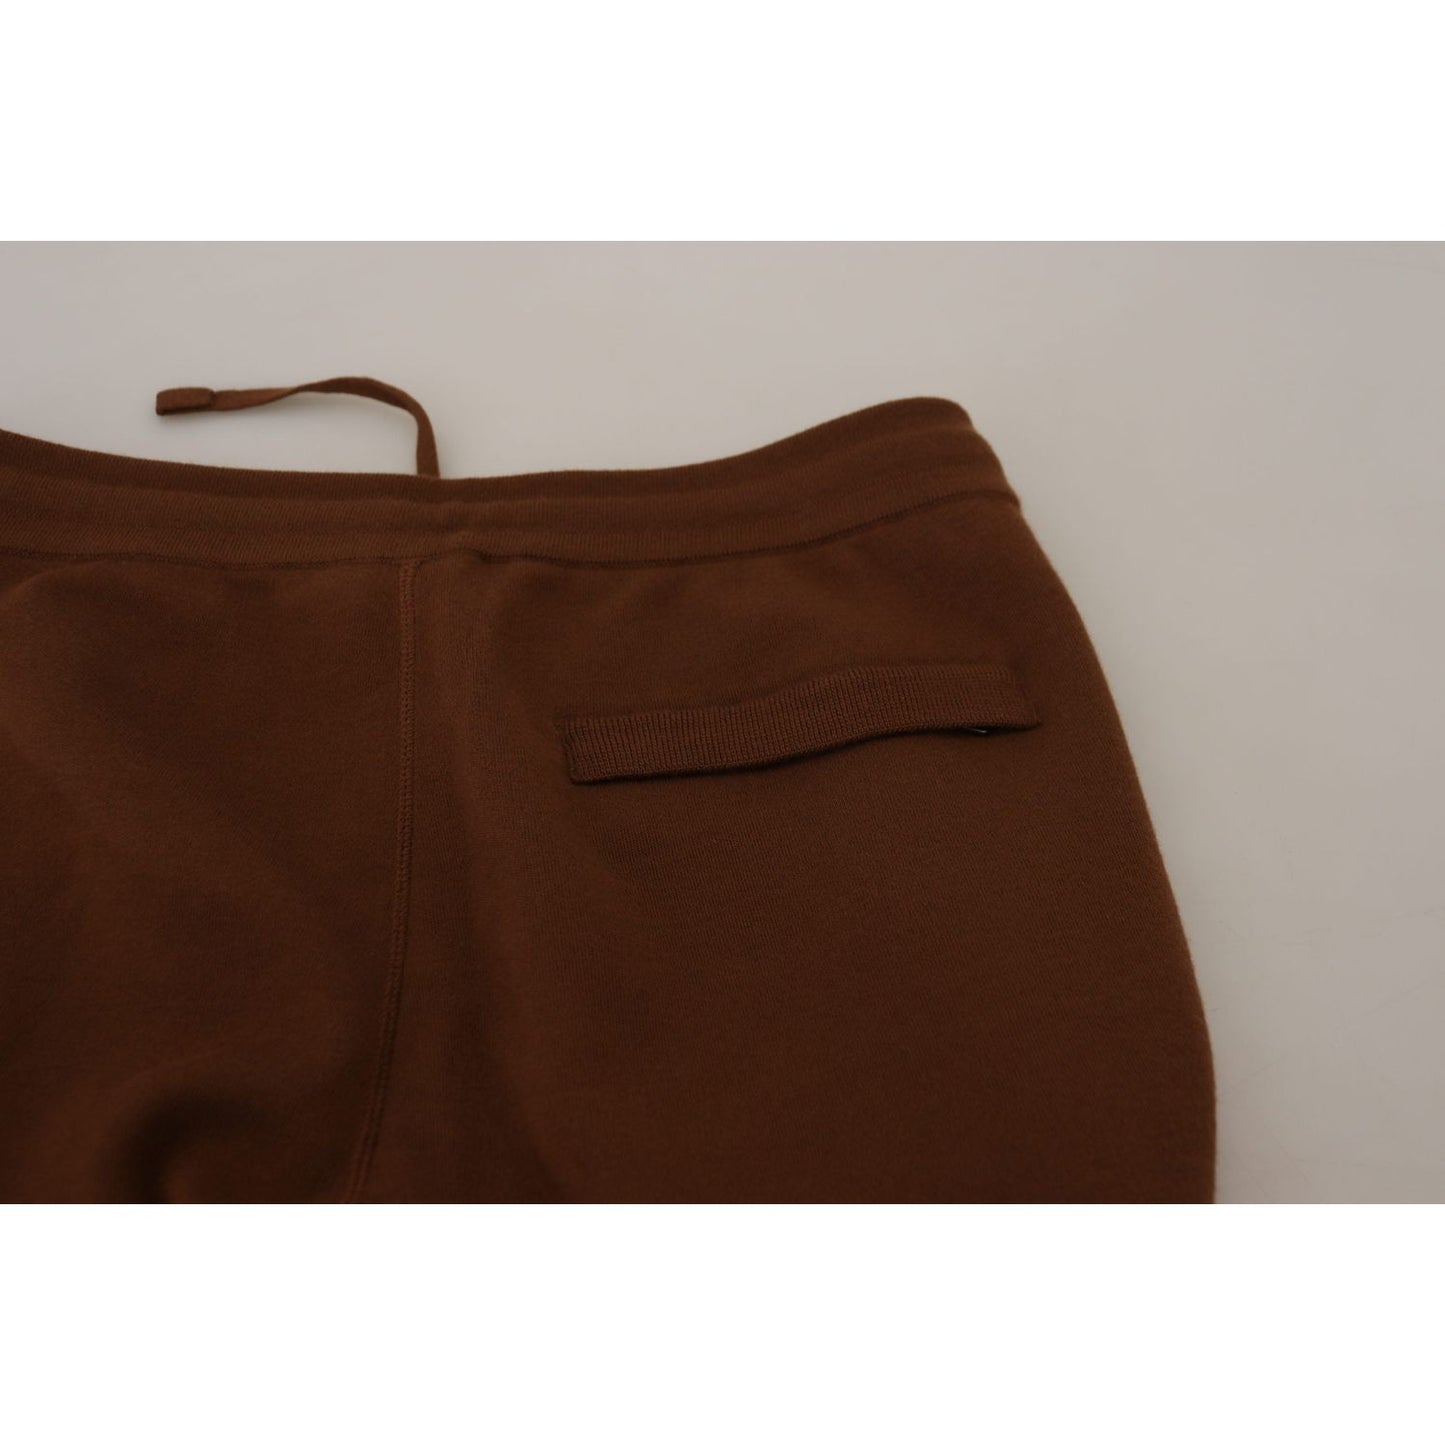 Dolce & Gabbana Elegant Brown Cashmere Jogger Pants brown-cashmere-men-drawstring-jogger-pants-1